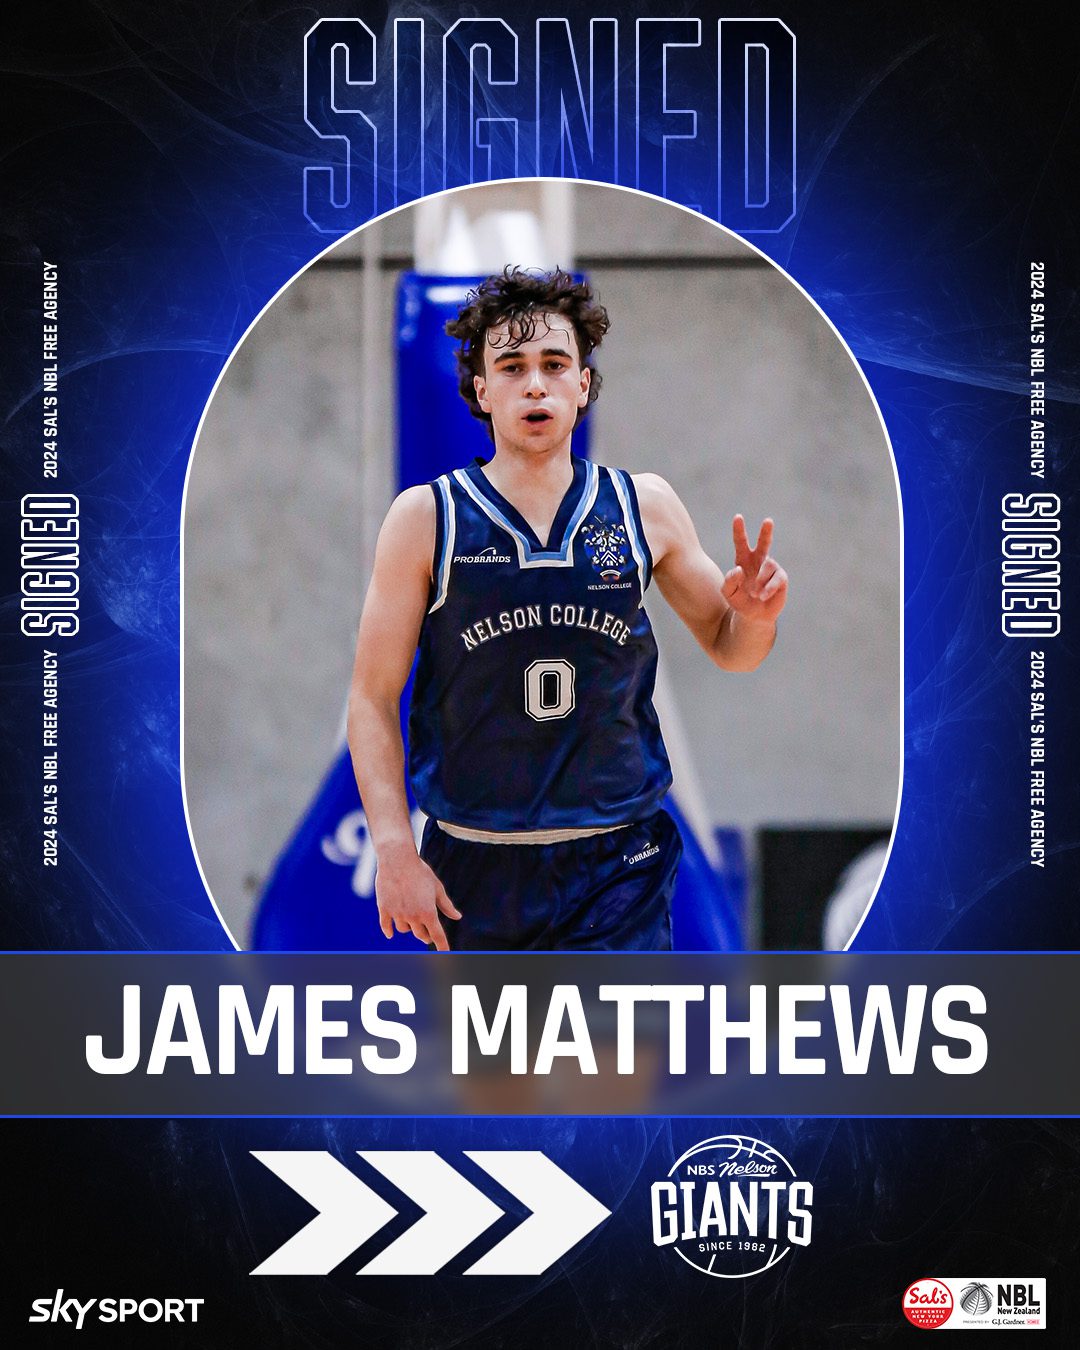 James Matthews